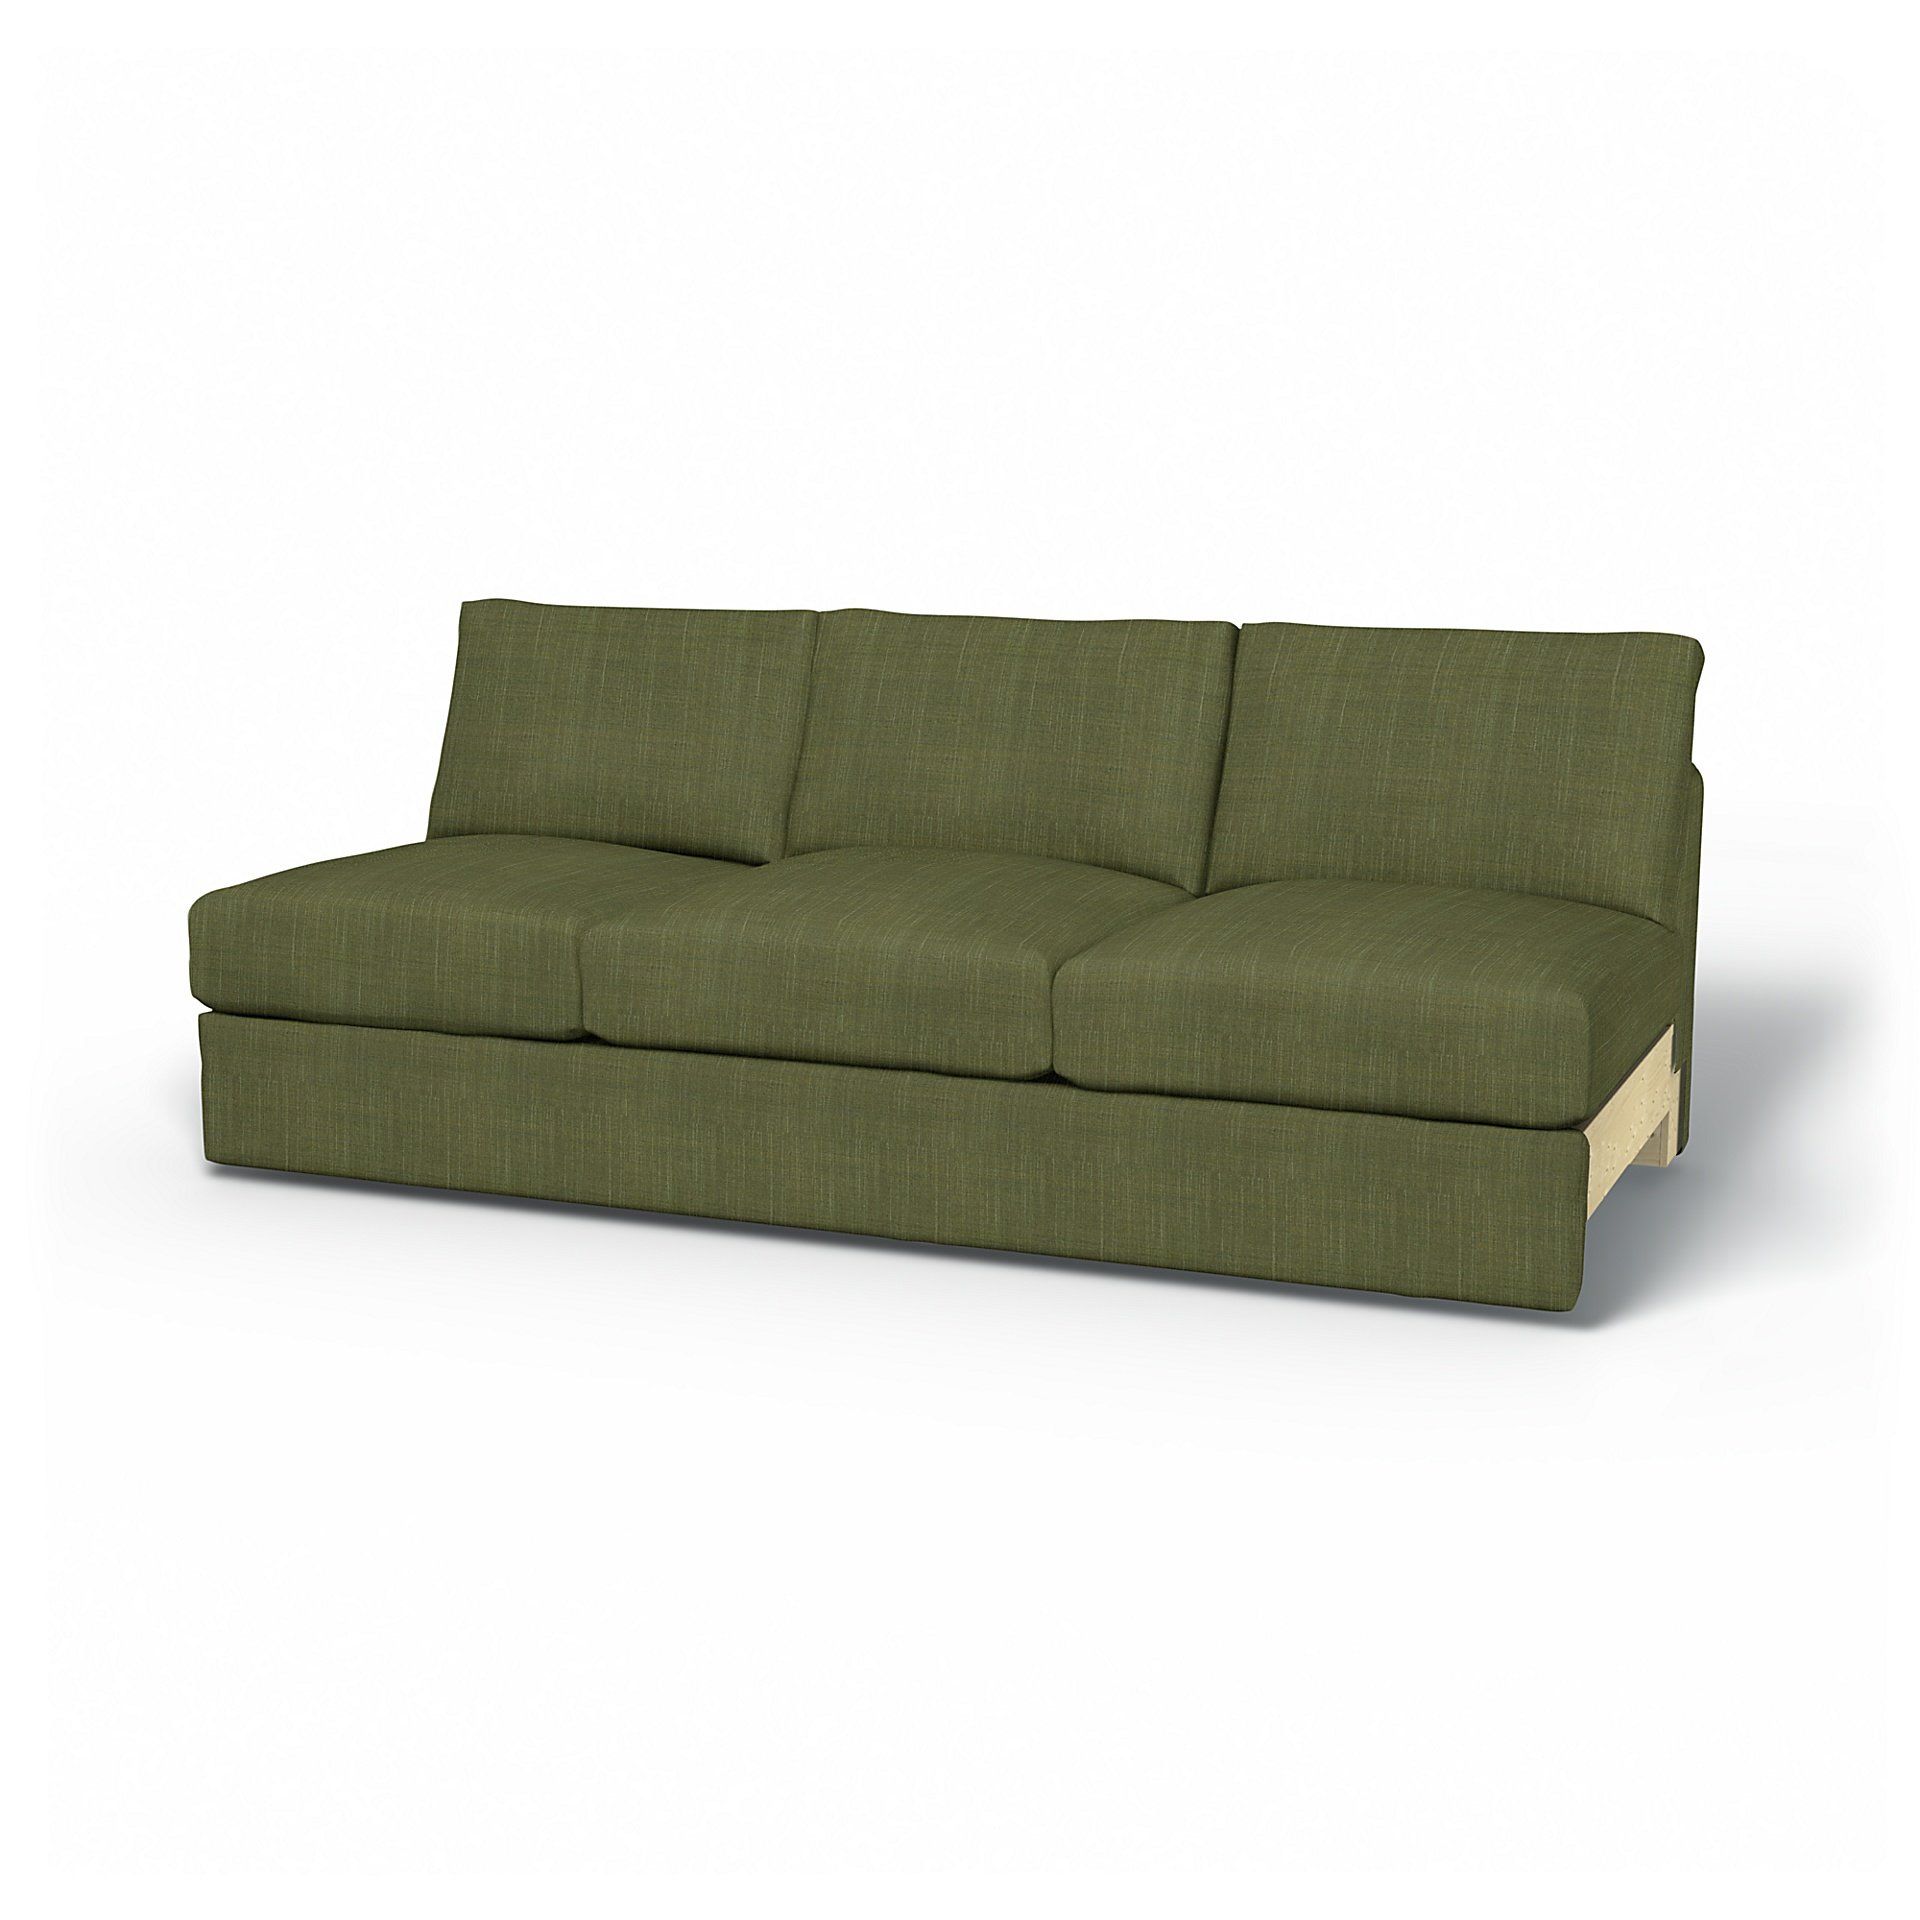 IKEA - Vimle 3 Seat Section Cover, Moss Green, Boucle & Texture - Bemz